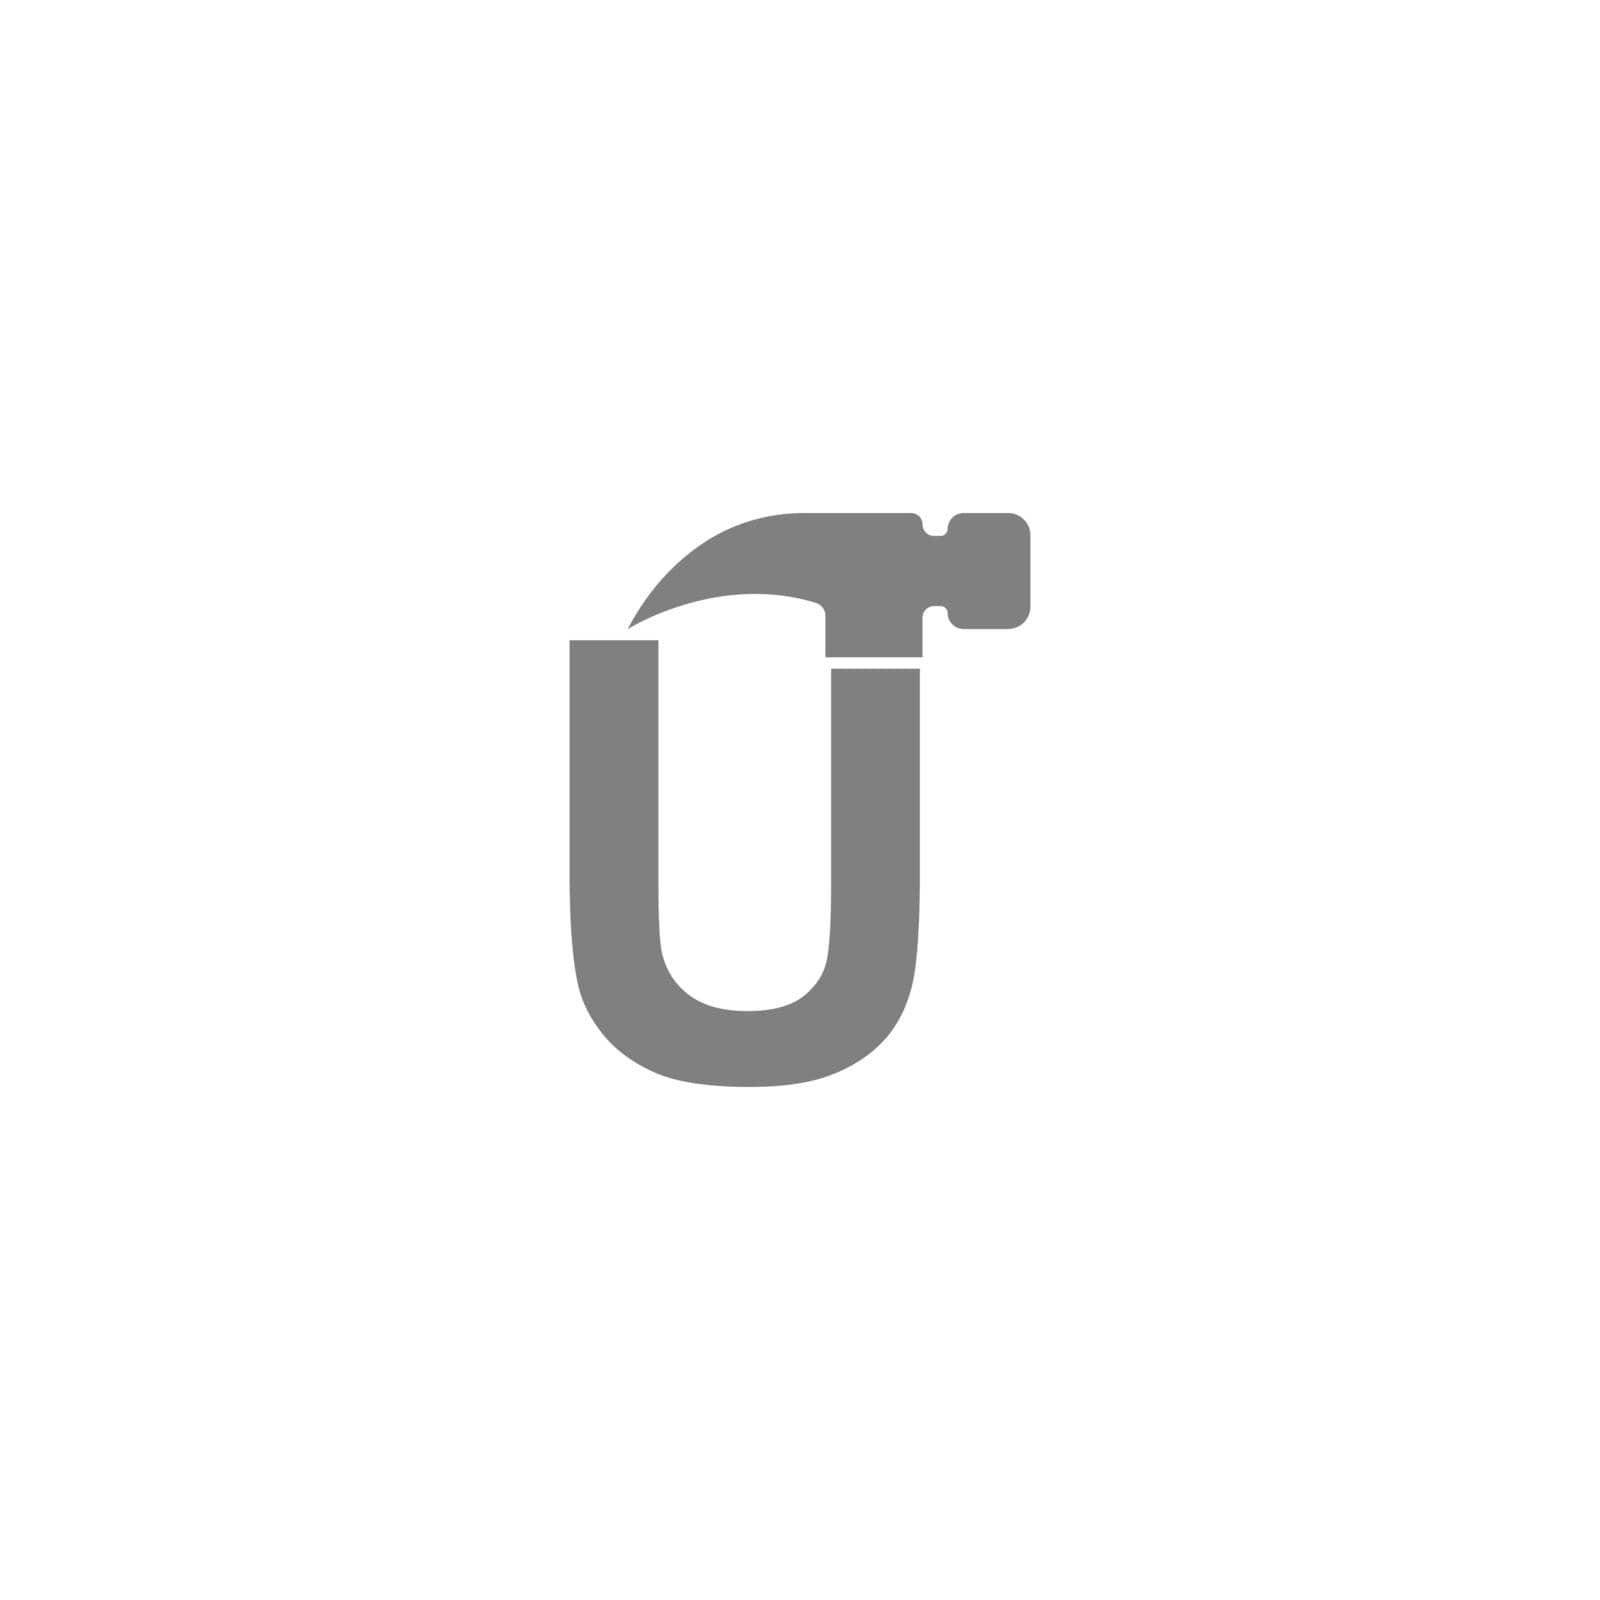 Letter U and hammer combination icon logo design vector